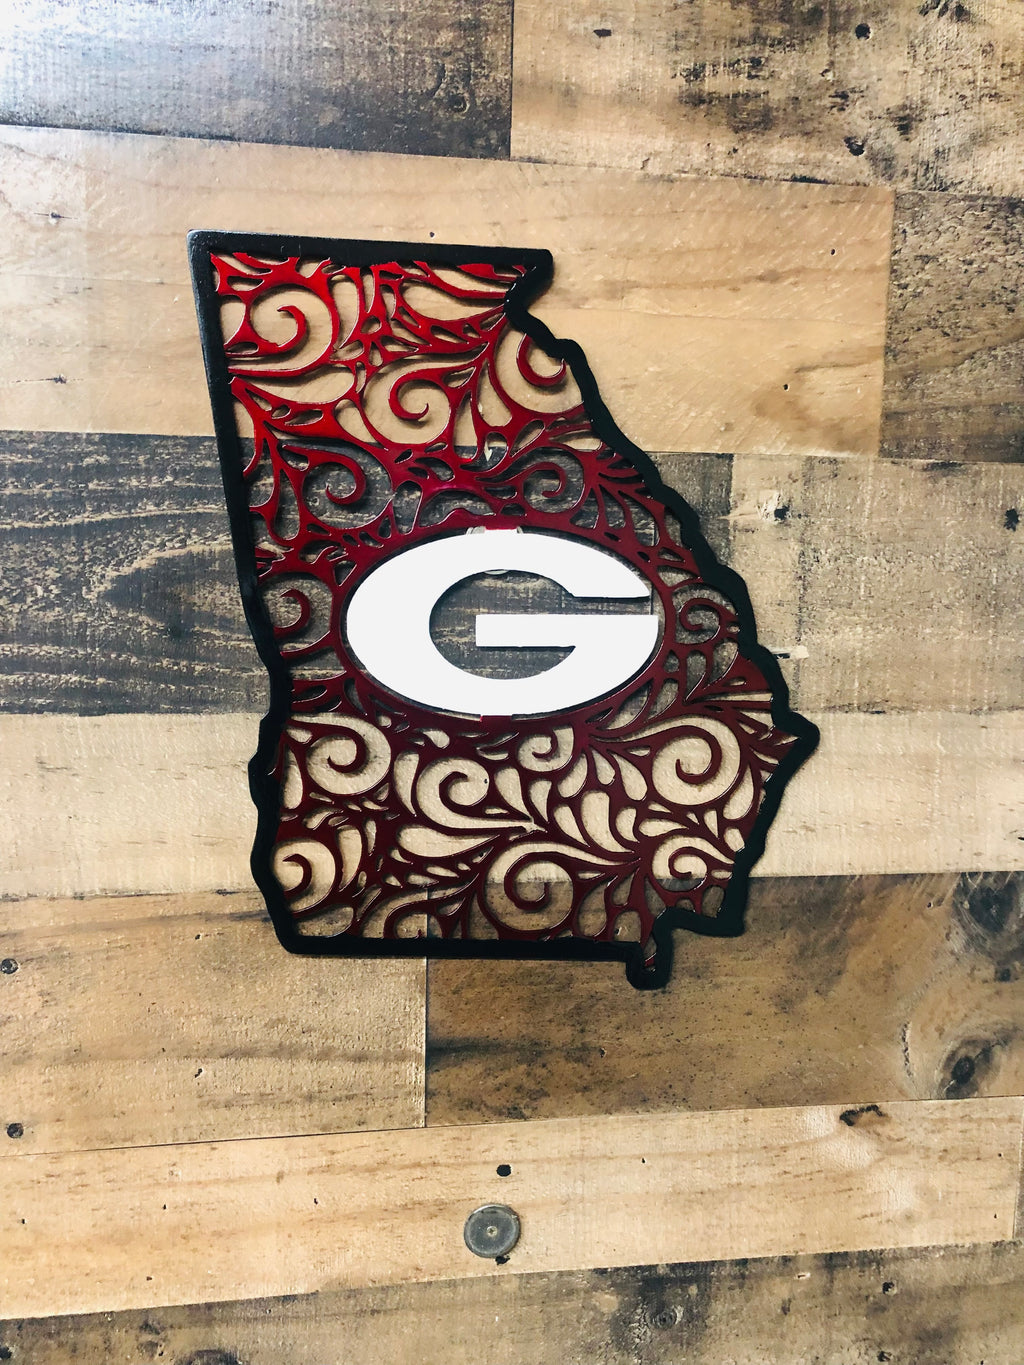 Georgia State of Mind